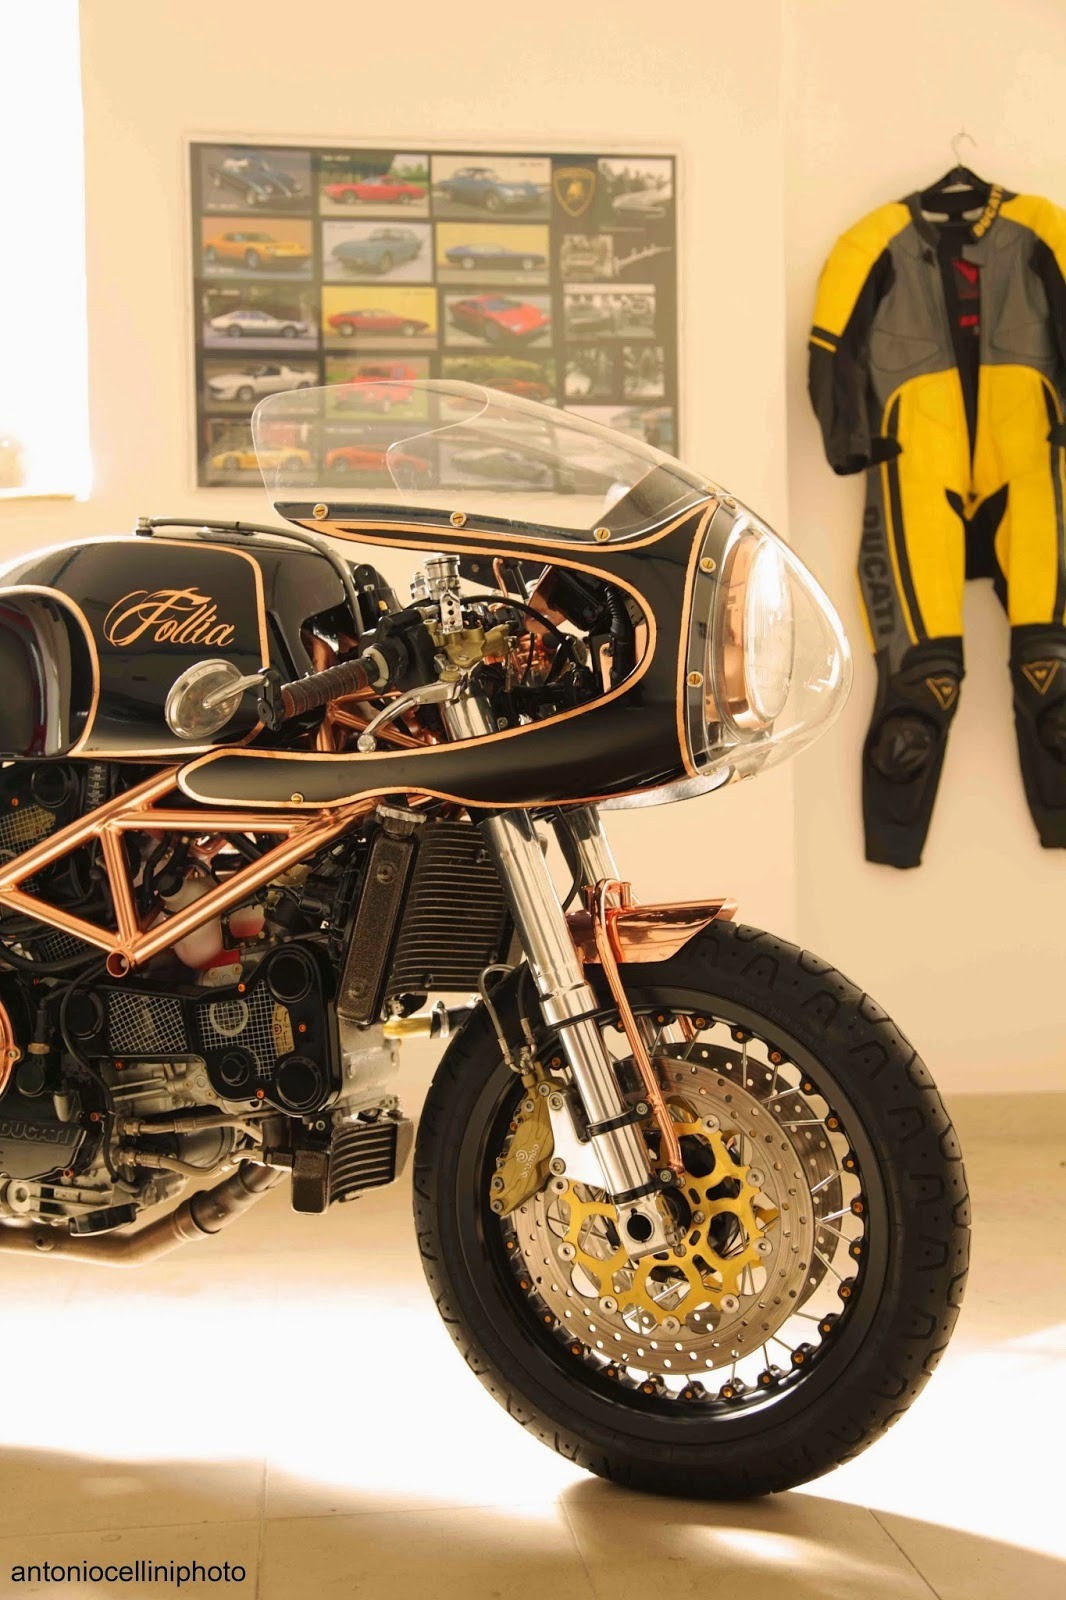 gr333nyboystuff:
“Ducati 916 Follia by Gustoadulto Custom , photo by Antonio Cellini.
”